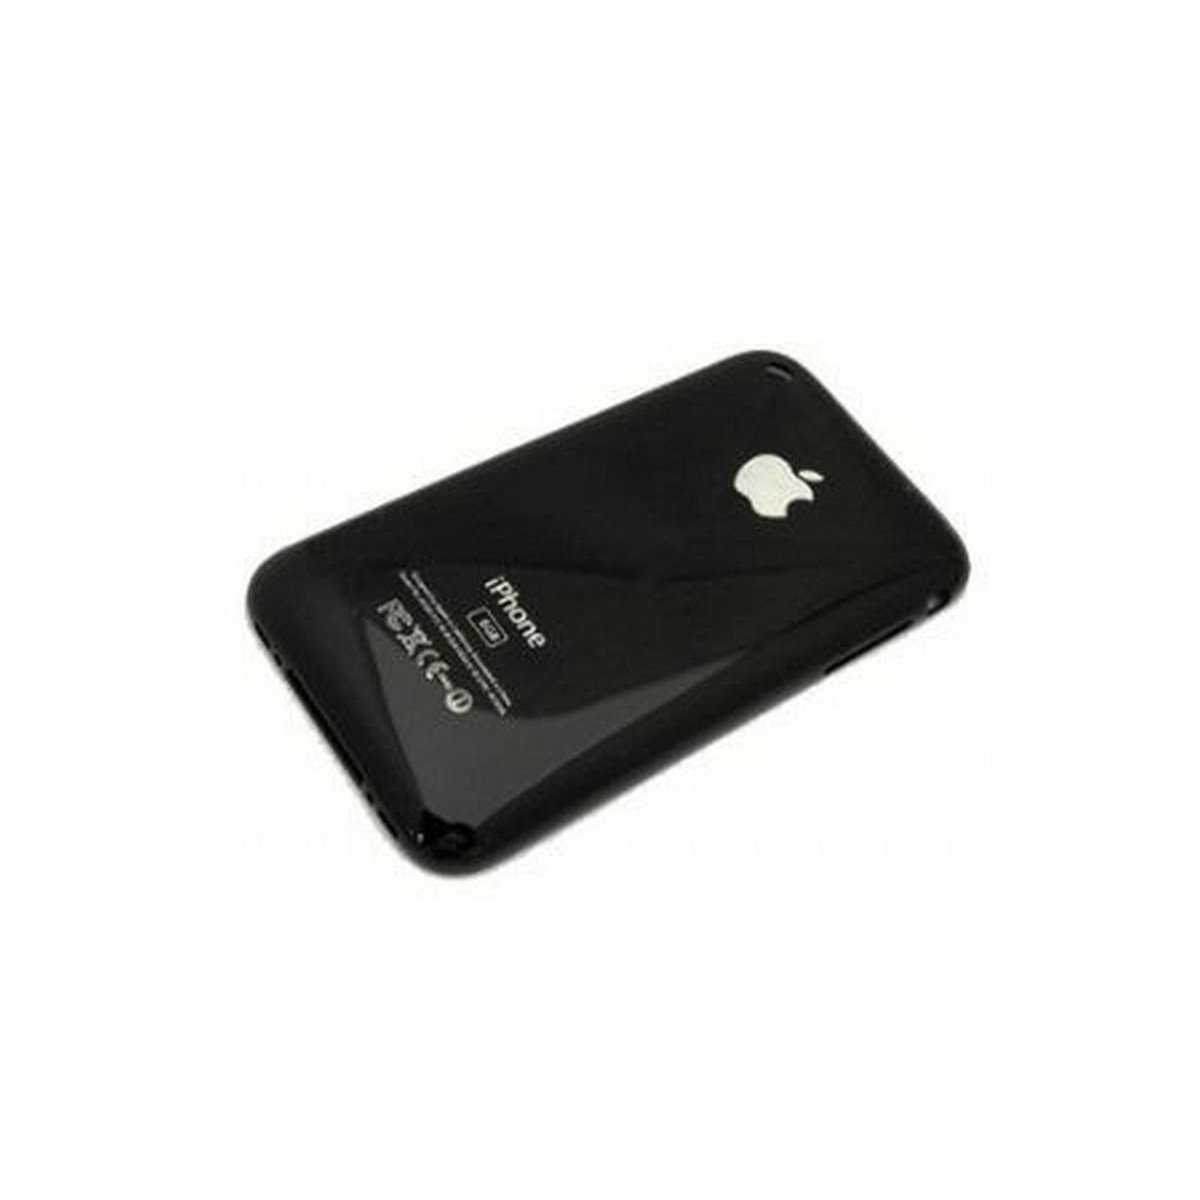 iPhone 3G 8GB carcaça traseira, tapa bateria PRETA